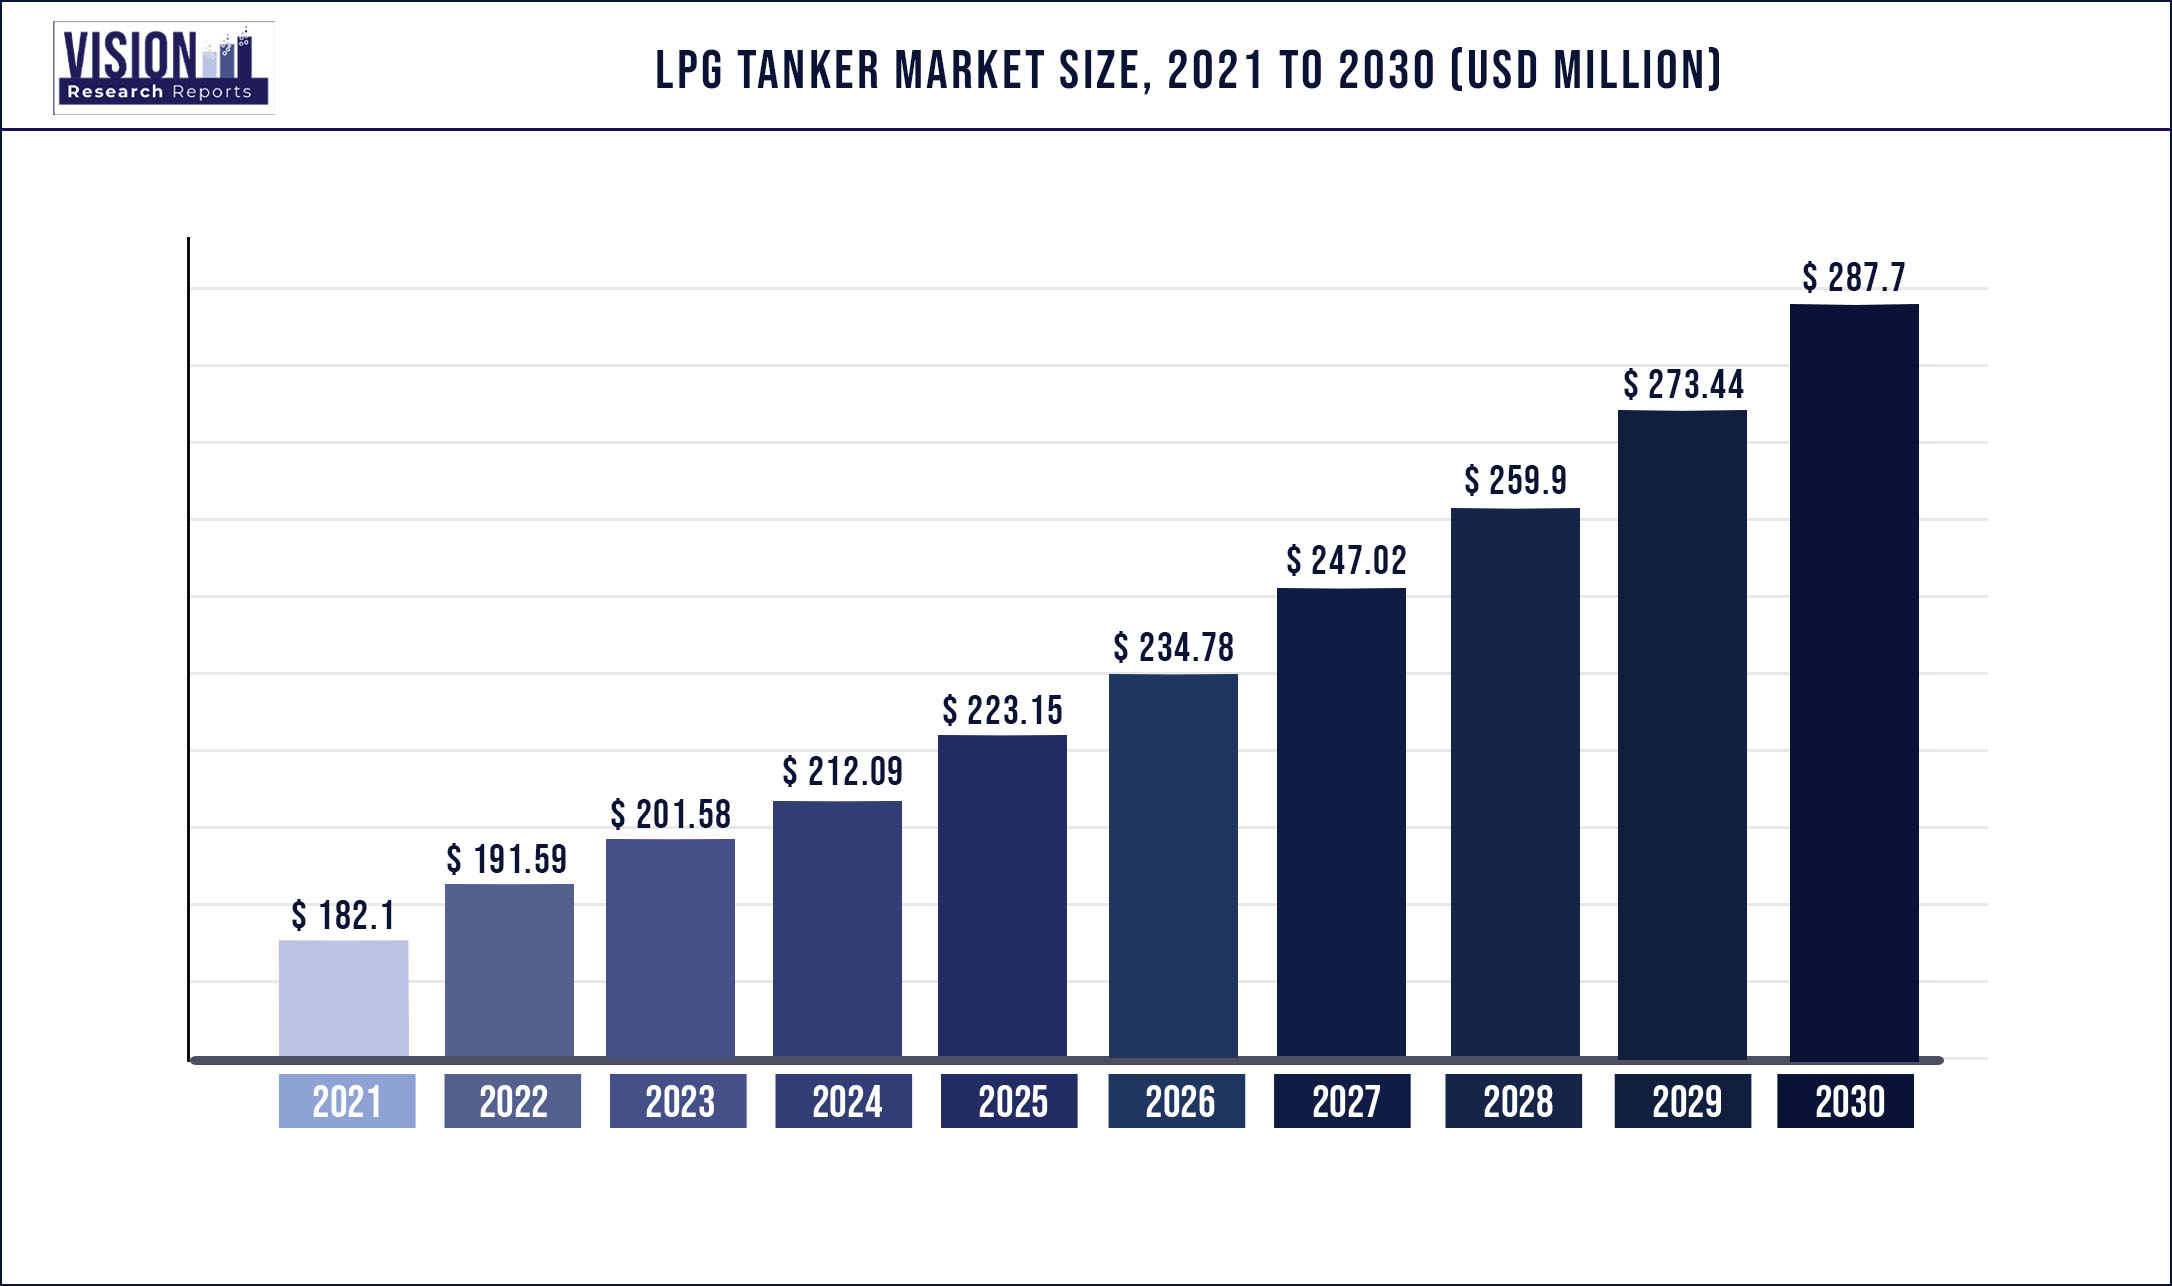 LPG Tanker Market Size 2021 to 2030